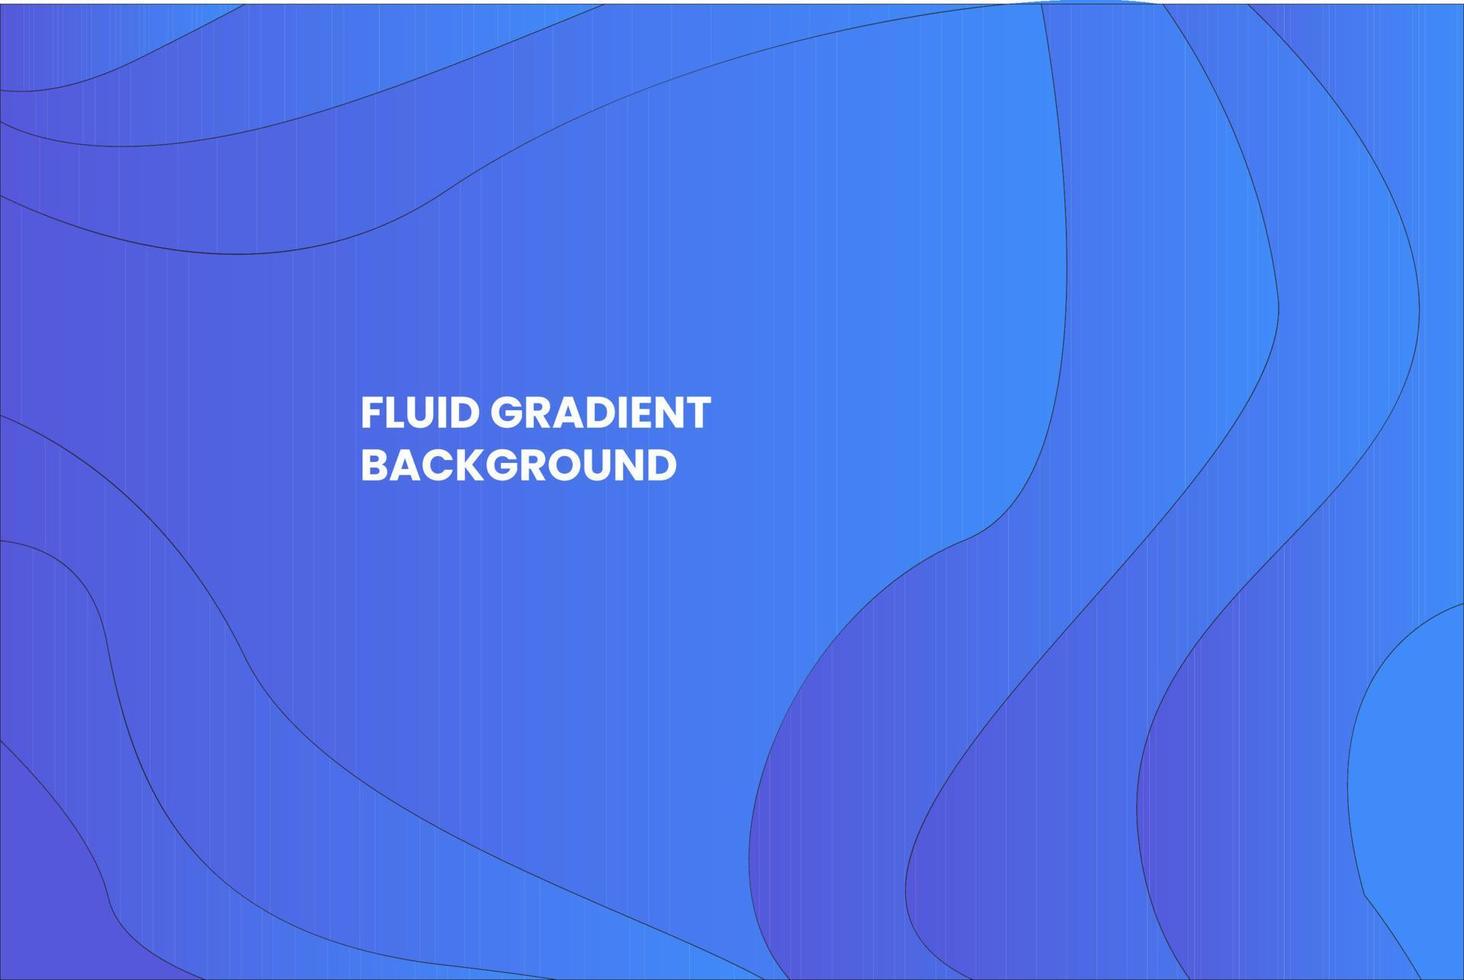 Liquid color background design. Blue elements with fluid gradient. Dynamic shapes composition. Eps10 vector. Vector illustration